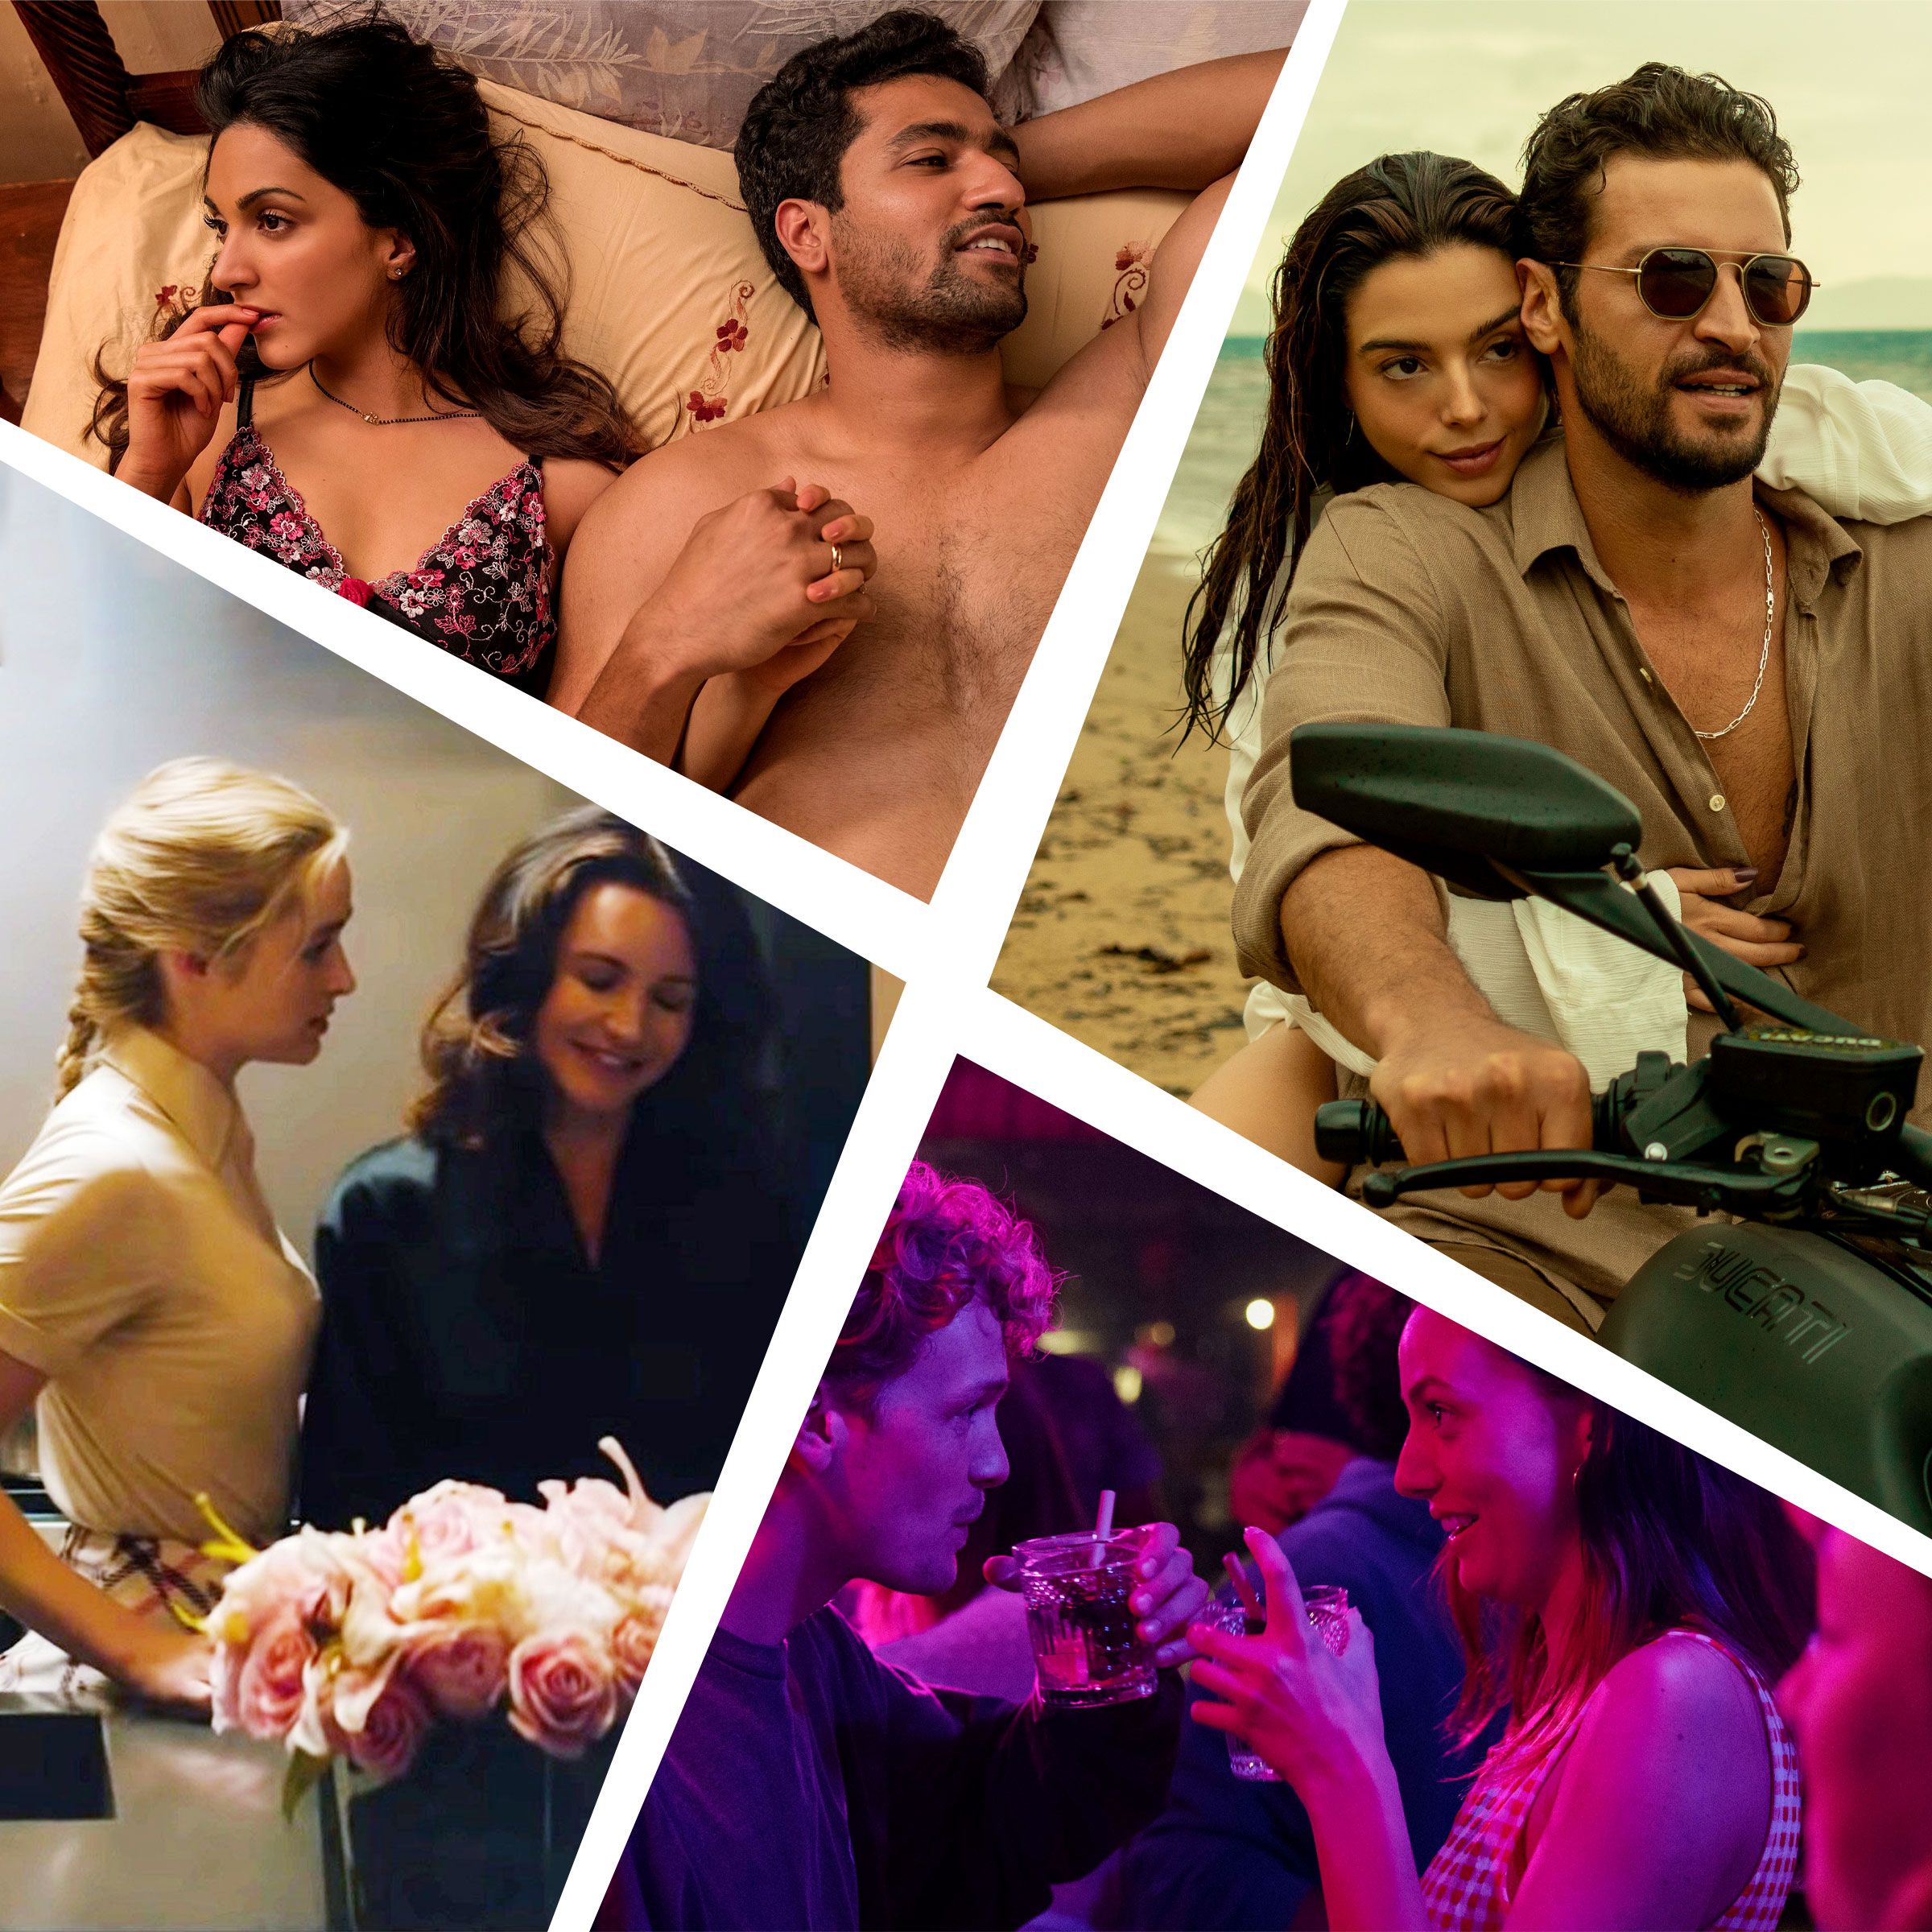 5 best romantic comedies to watch on Netflix in 2022